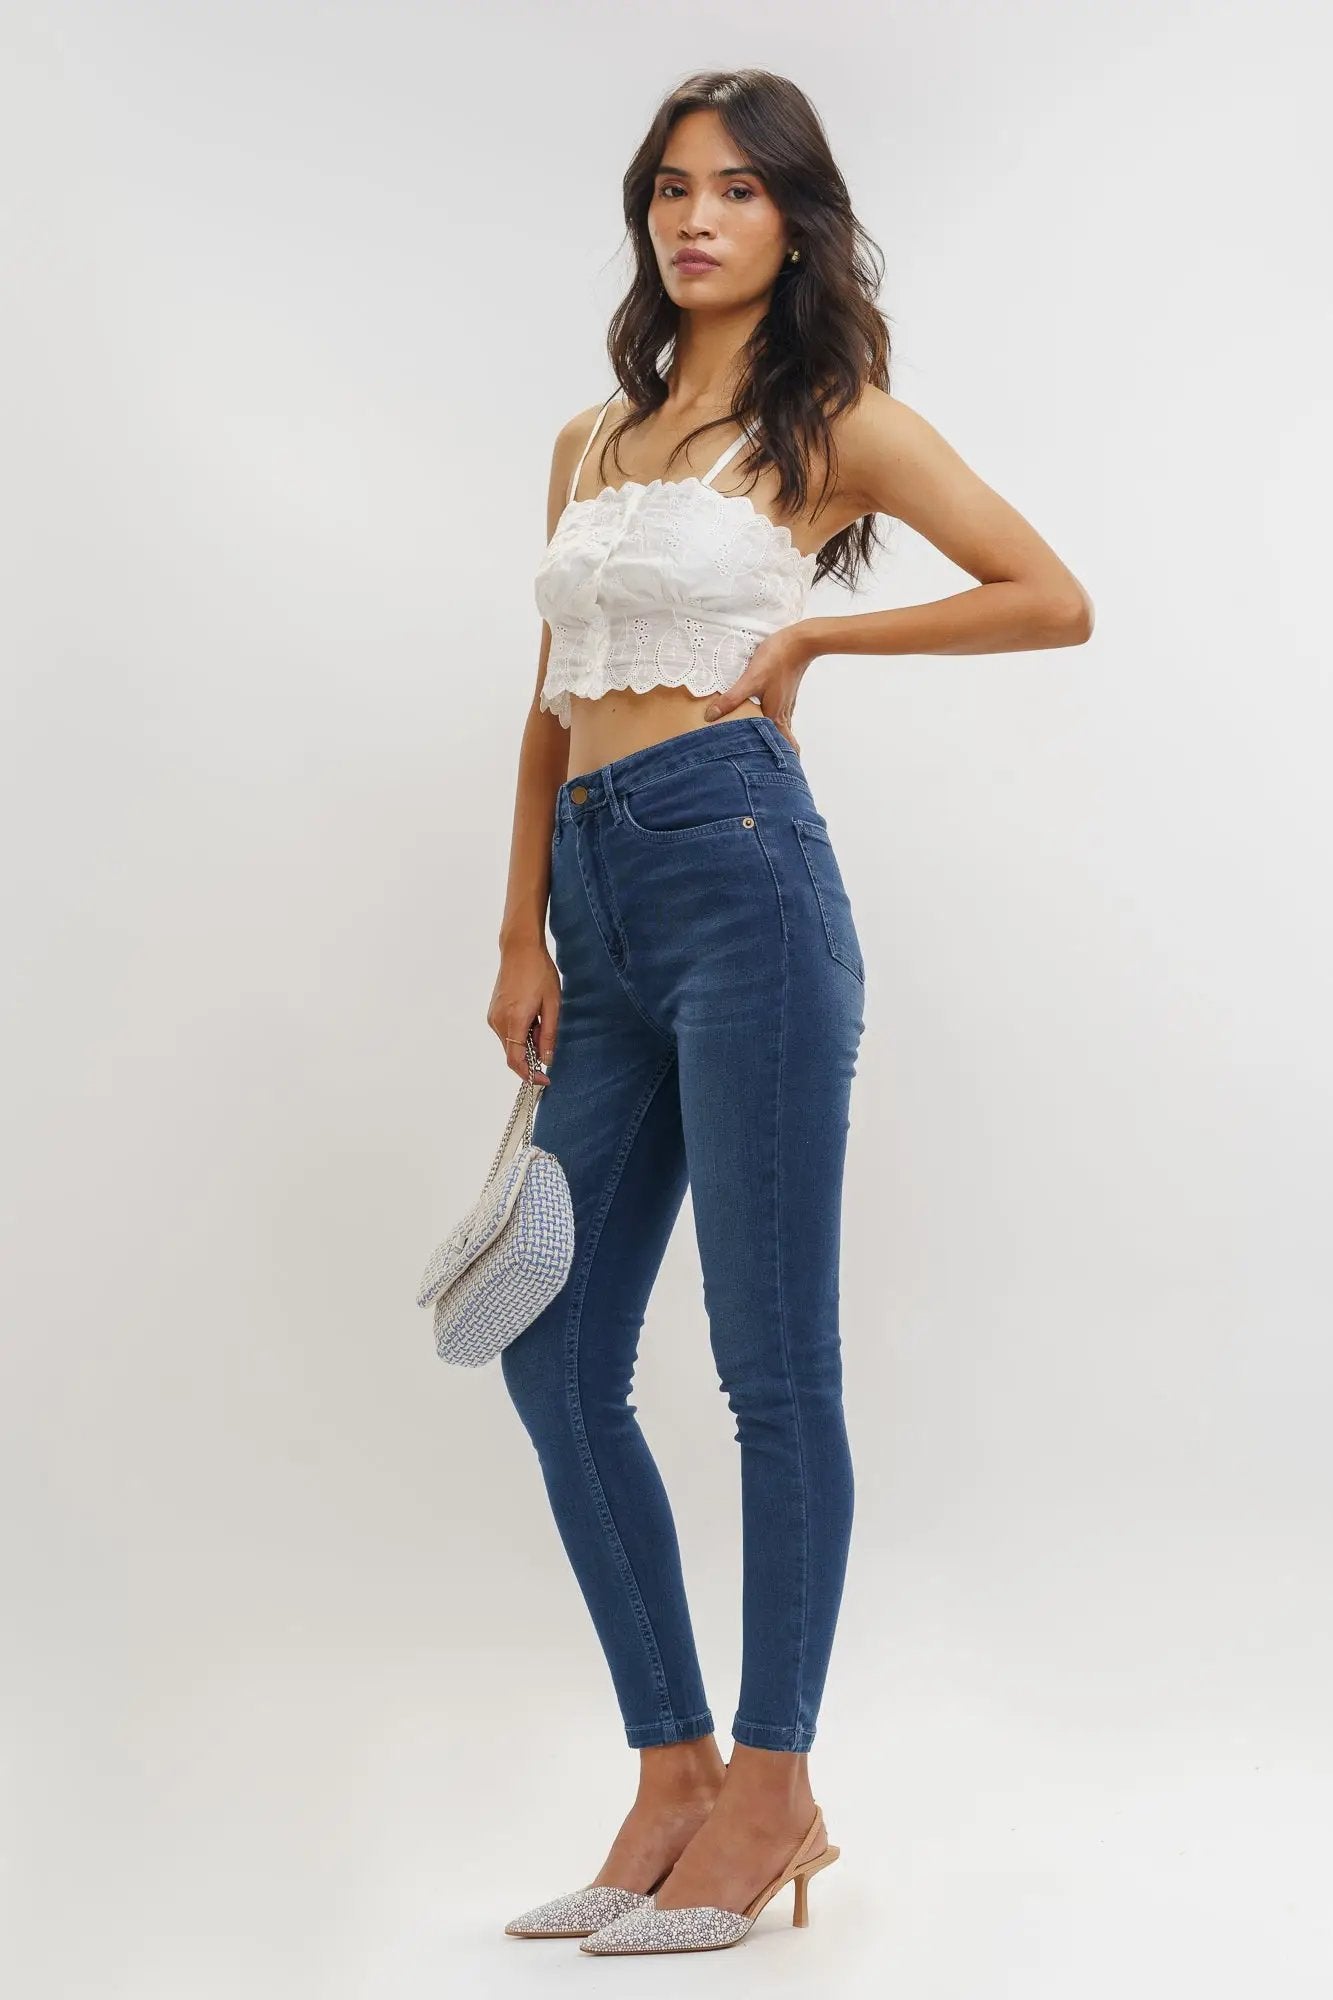 Shop High Waist Jeans ,Stylish jeans for girl | Urbane Yogi Life Style